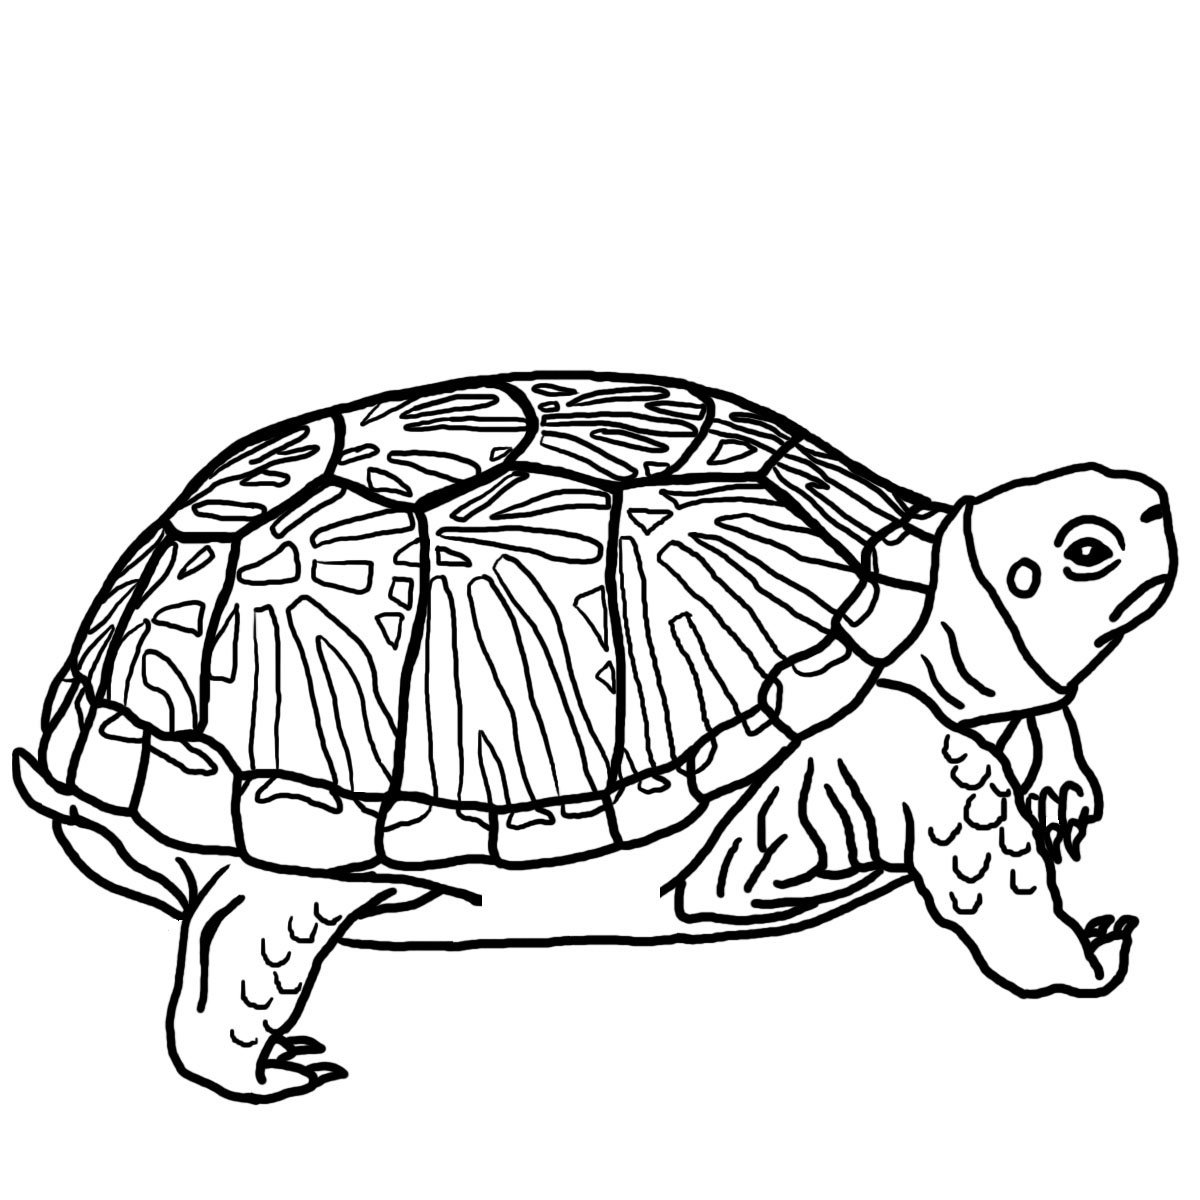 Turtle Clip Art Preschool | Clipart Panda - Free Clipart Images